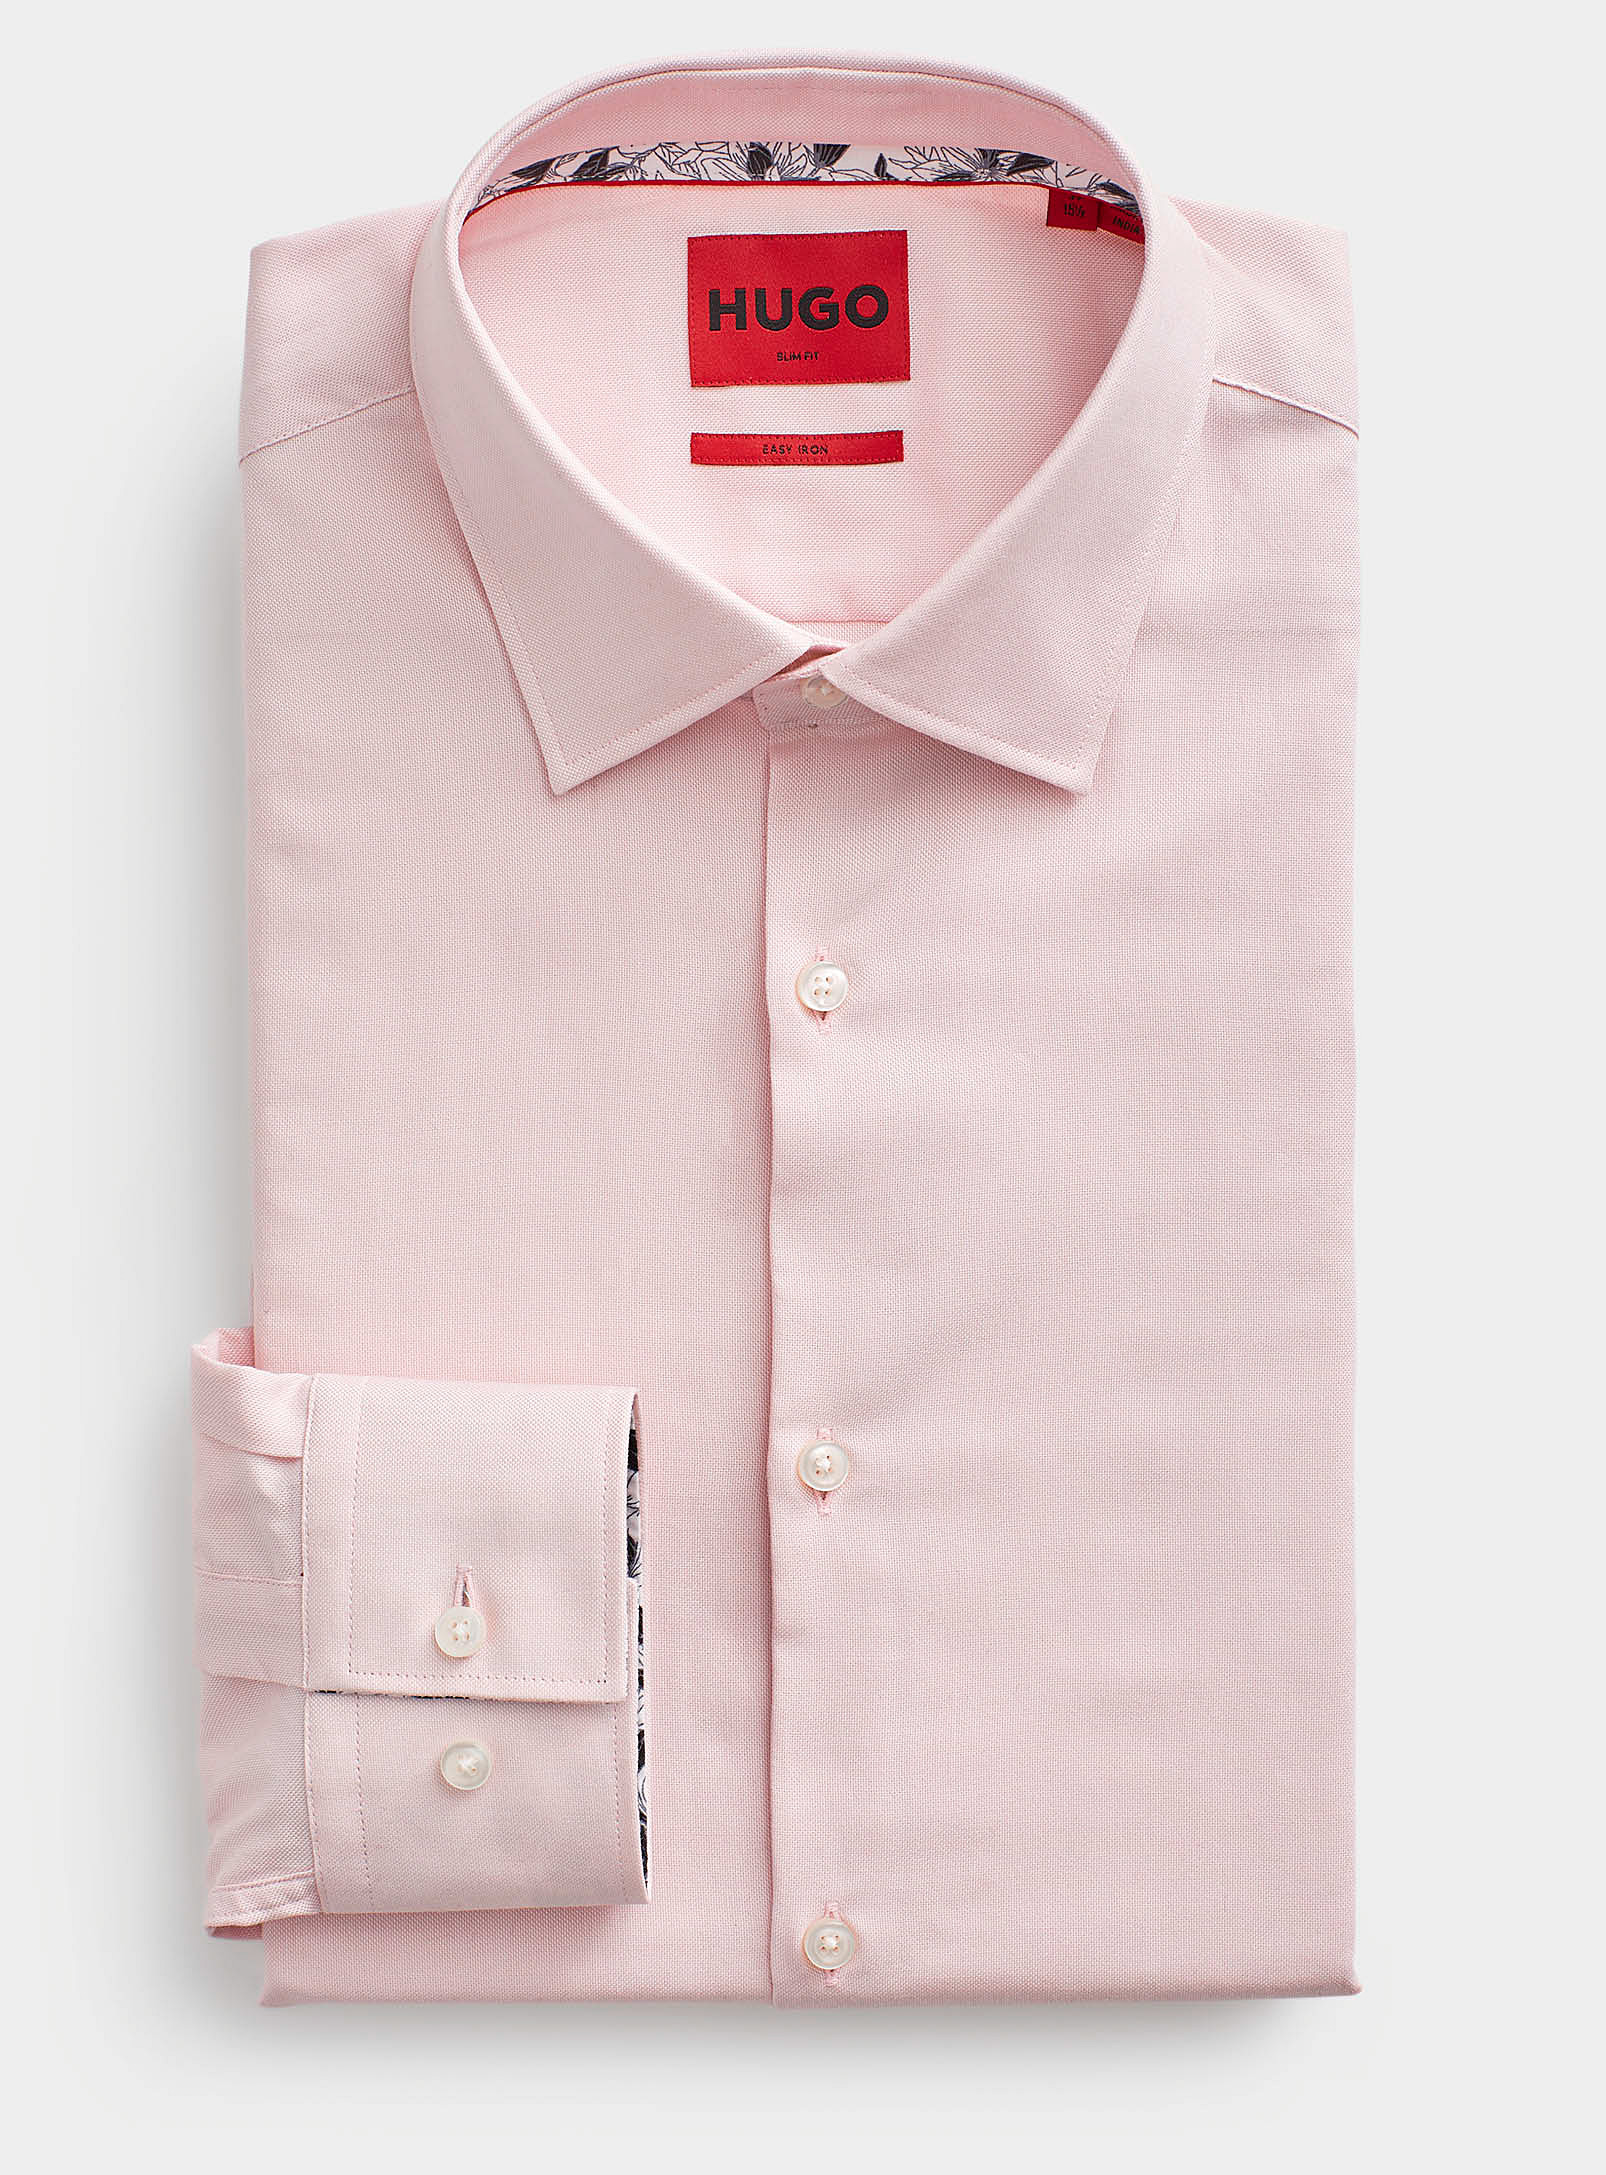 HUGO - Men's Light-pink Oxford shirt Modern fit